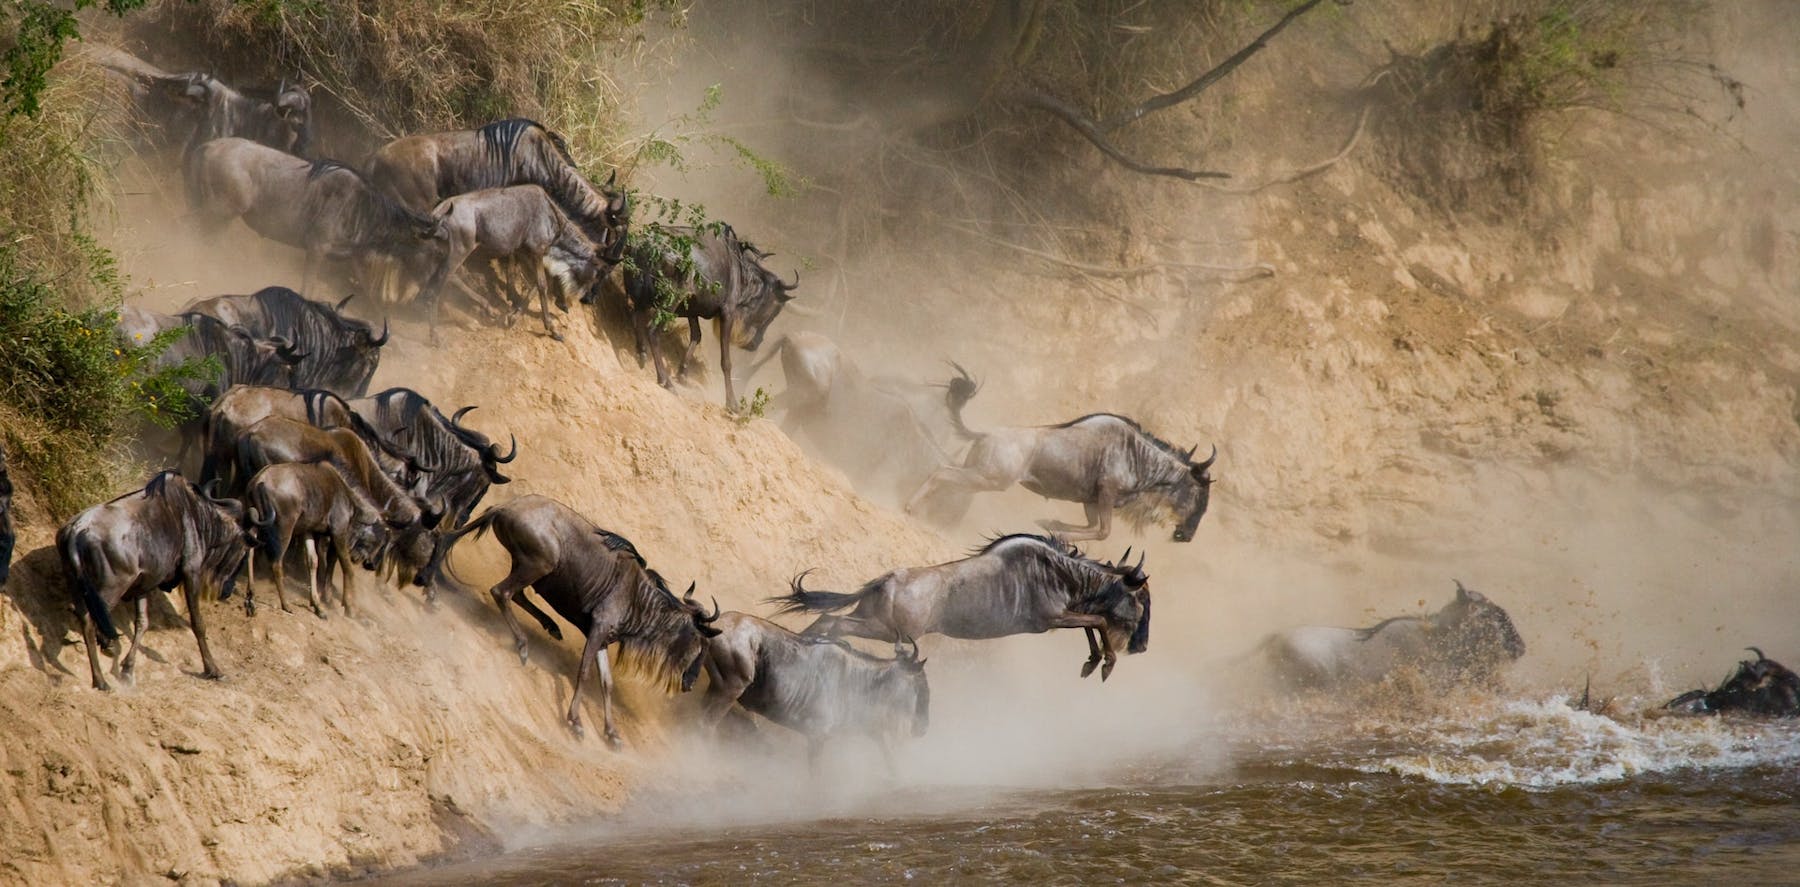 Wildebeest migration in the Serengeti, Tanzania